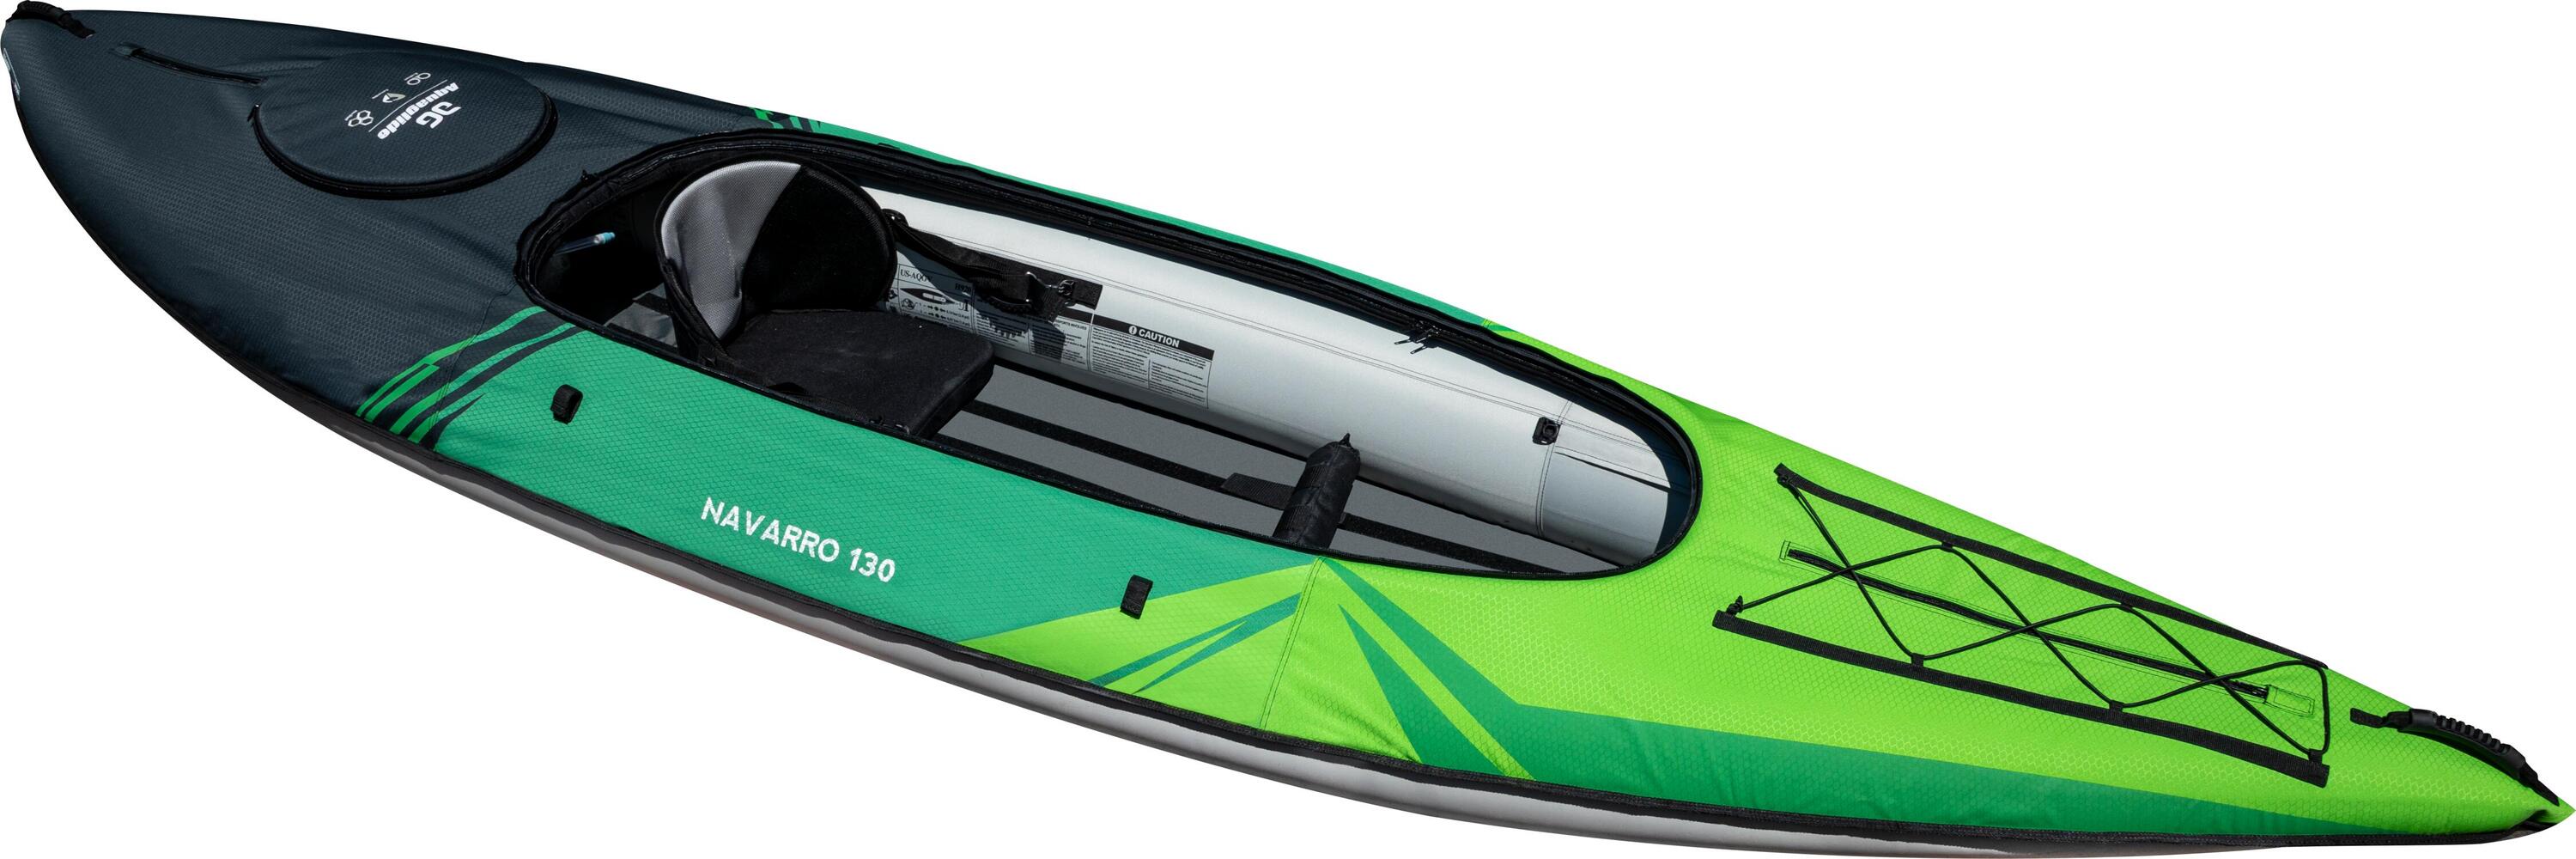 Navarro 110 1 Person Inflatable Kayak 3/5